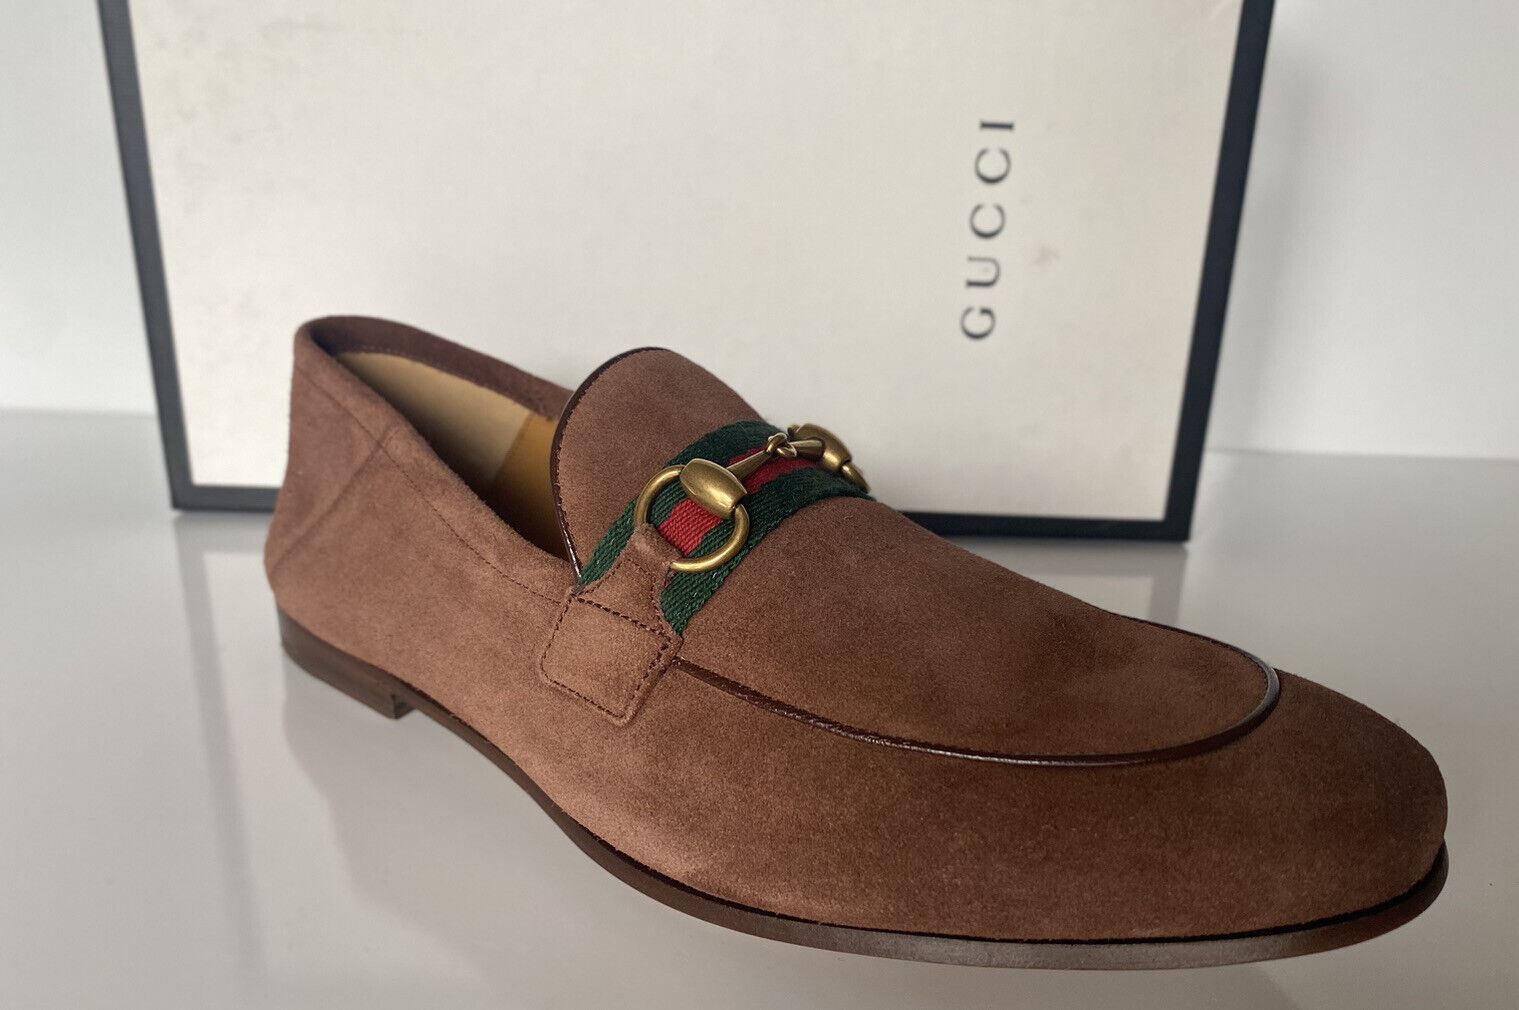 NIB Gucci Men's Horsebit Suede Web Moccasin Shoes Brown 9.5 US (Gucci 9) 581513